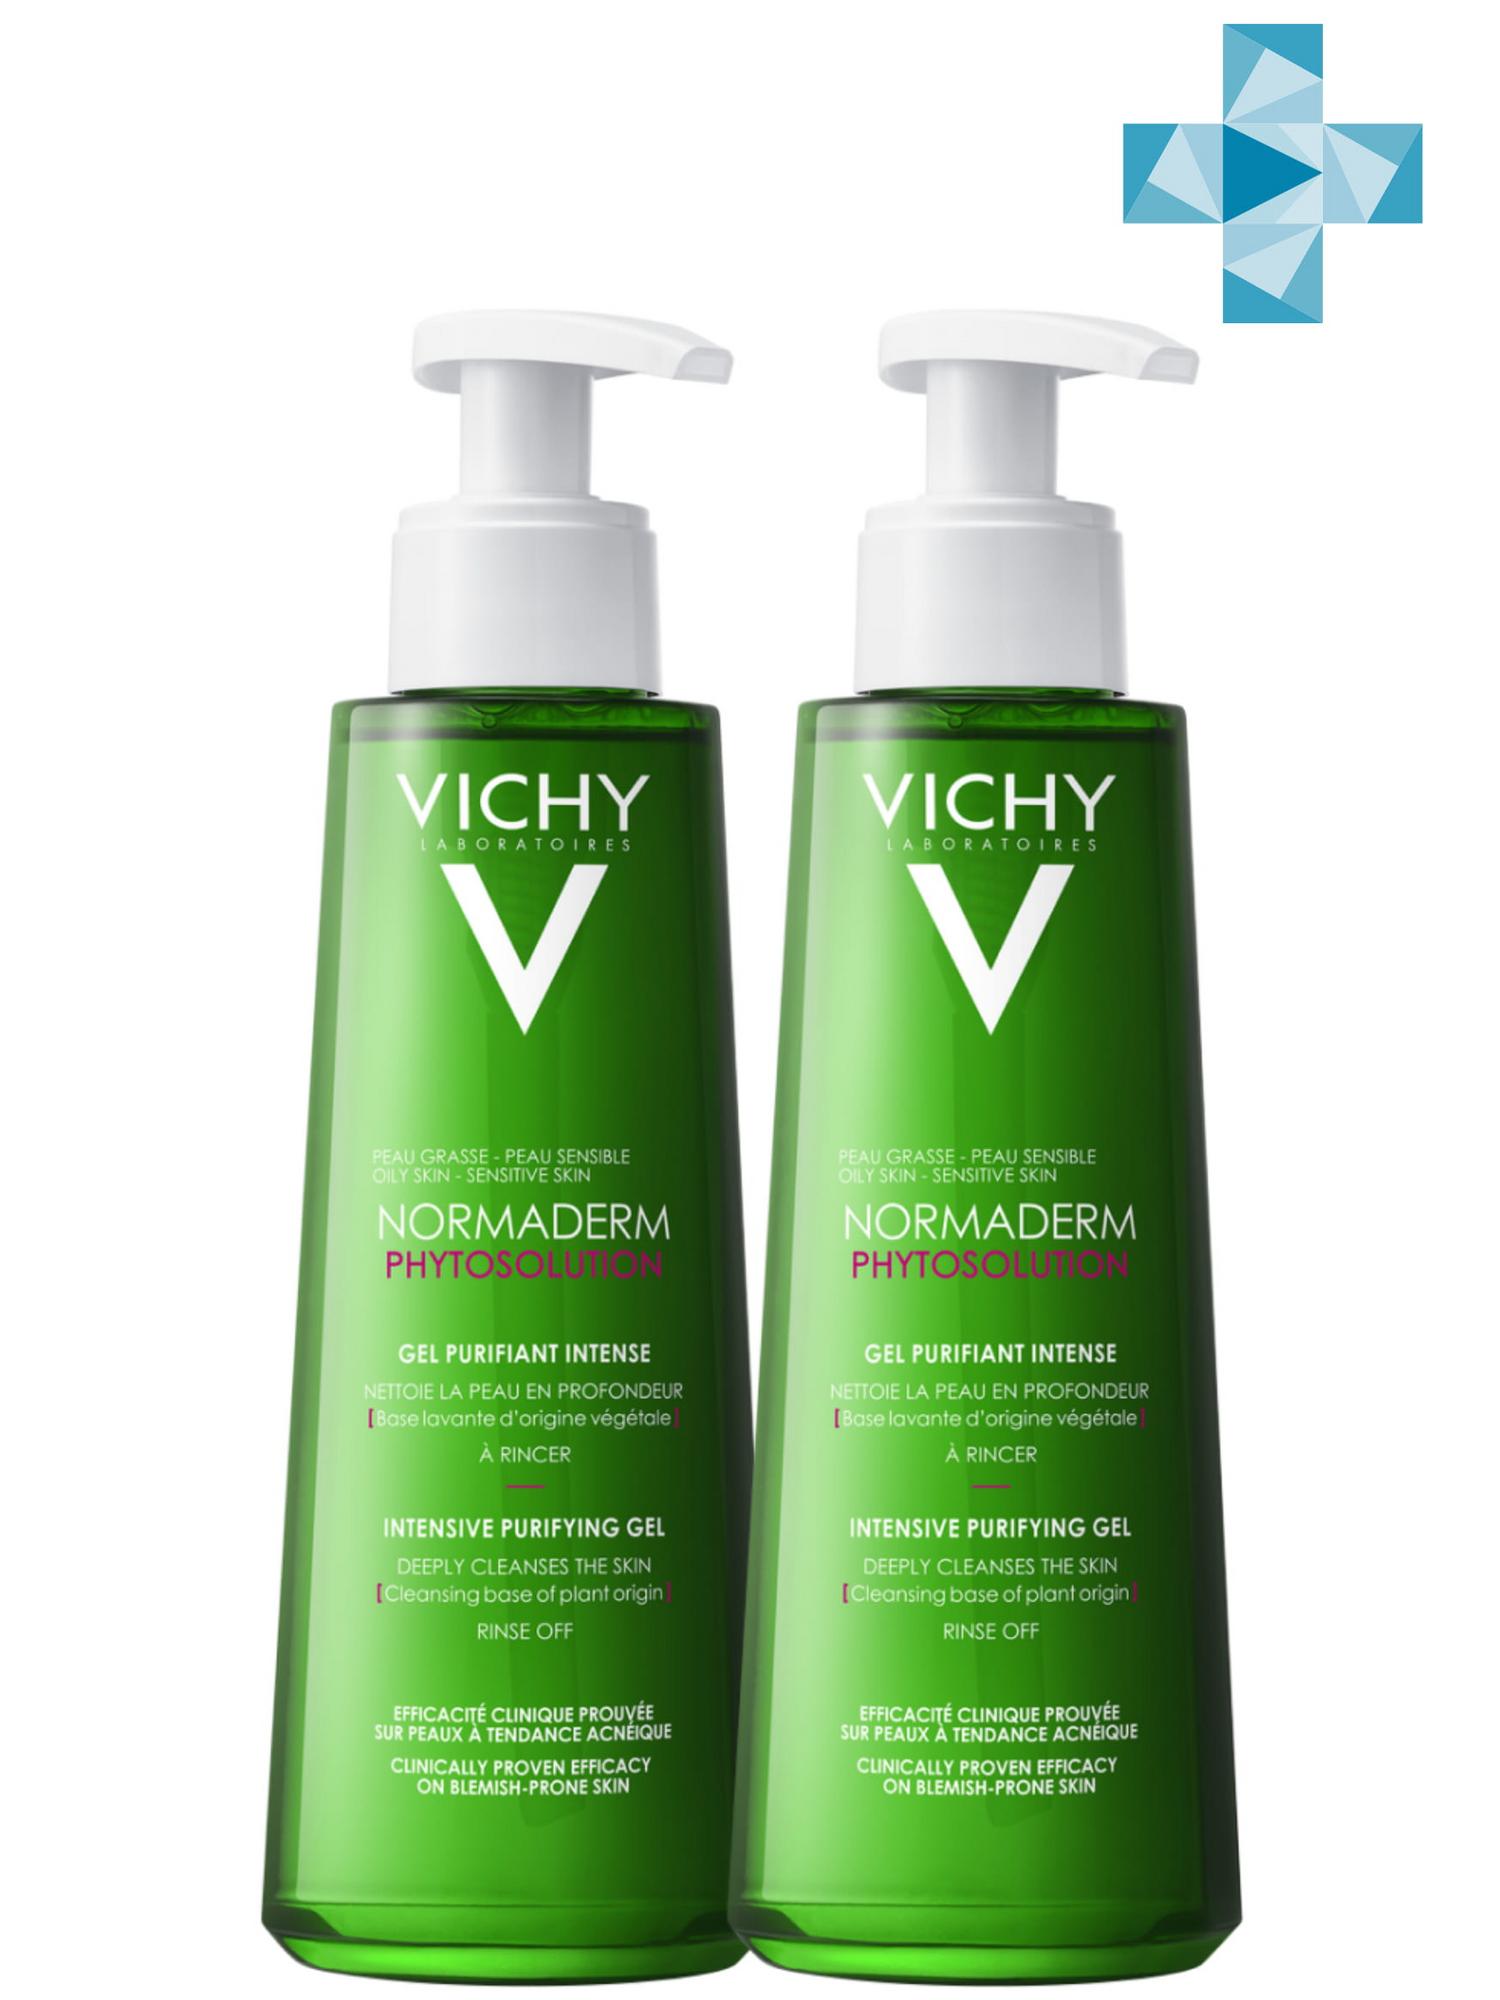 Vichy Комплект Нормадерм Фитосолюшн Очищающий гель для умывания, 2 шт. по 200 мл (Vichy, Normaderm)